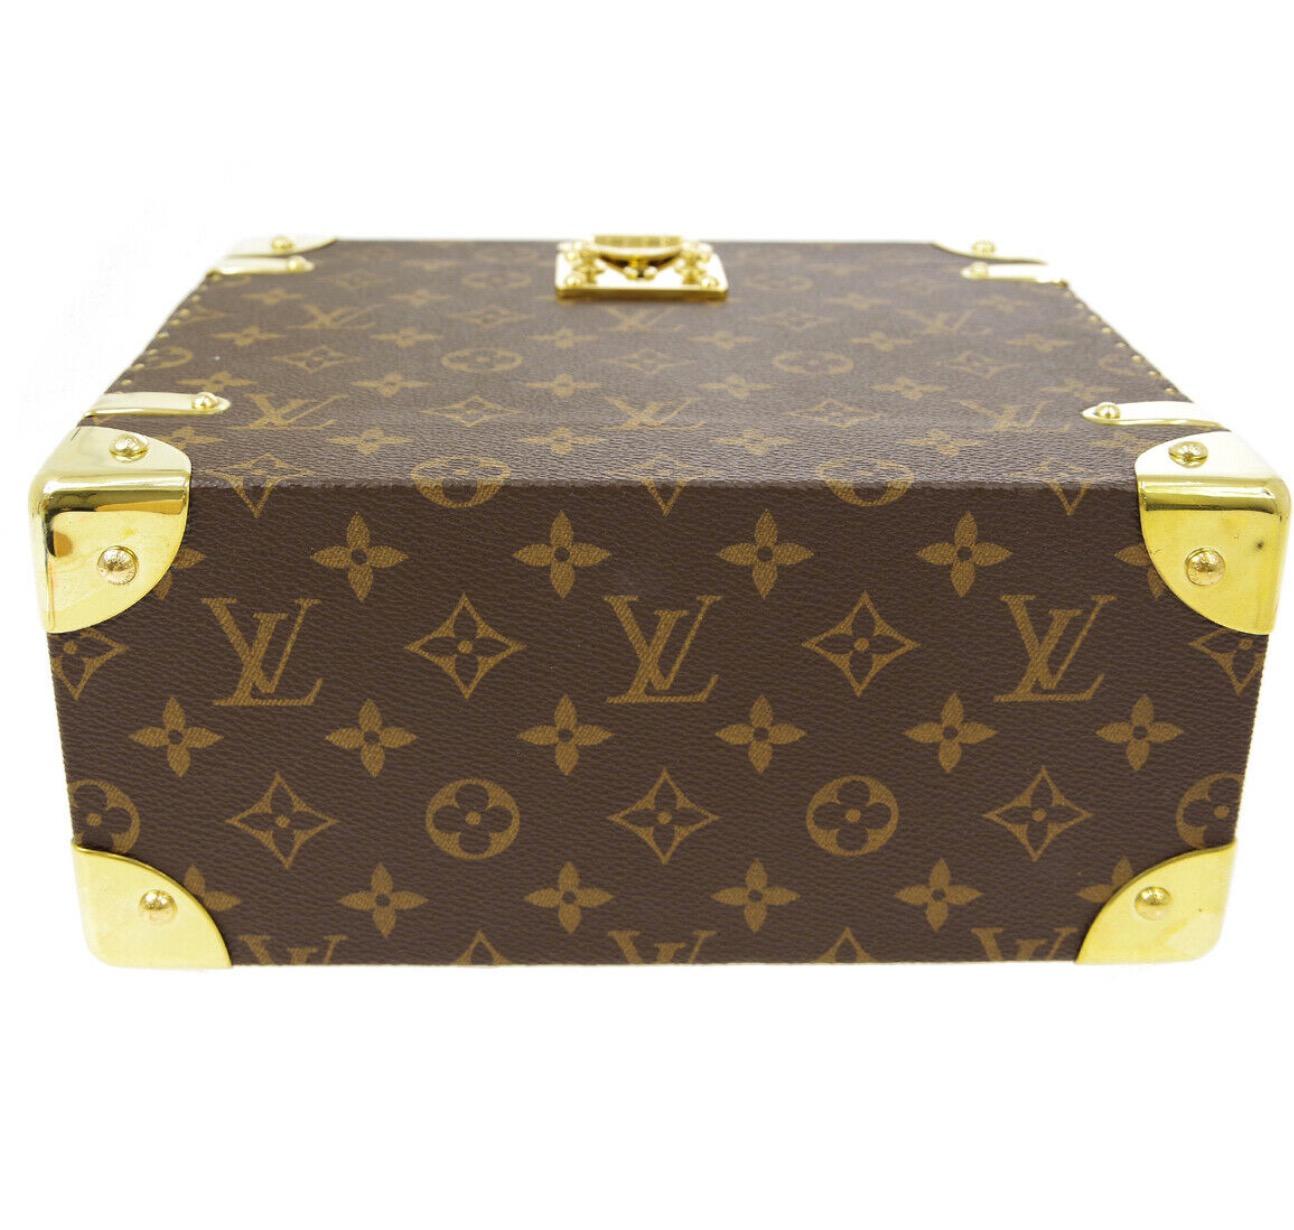 Beige Louis Vuitton Monogram Men's Women's Vanity Perfume Cologne Travel Trunk Case